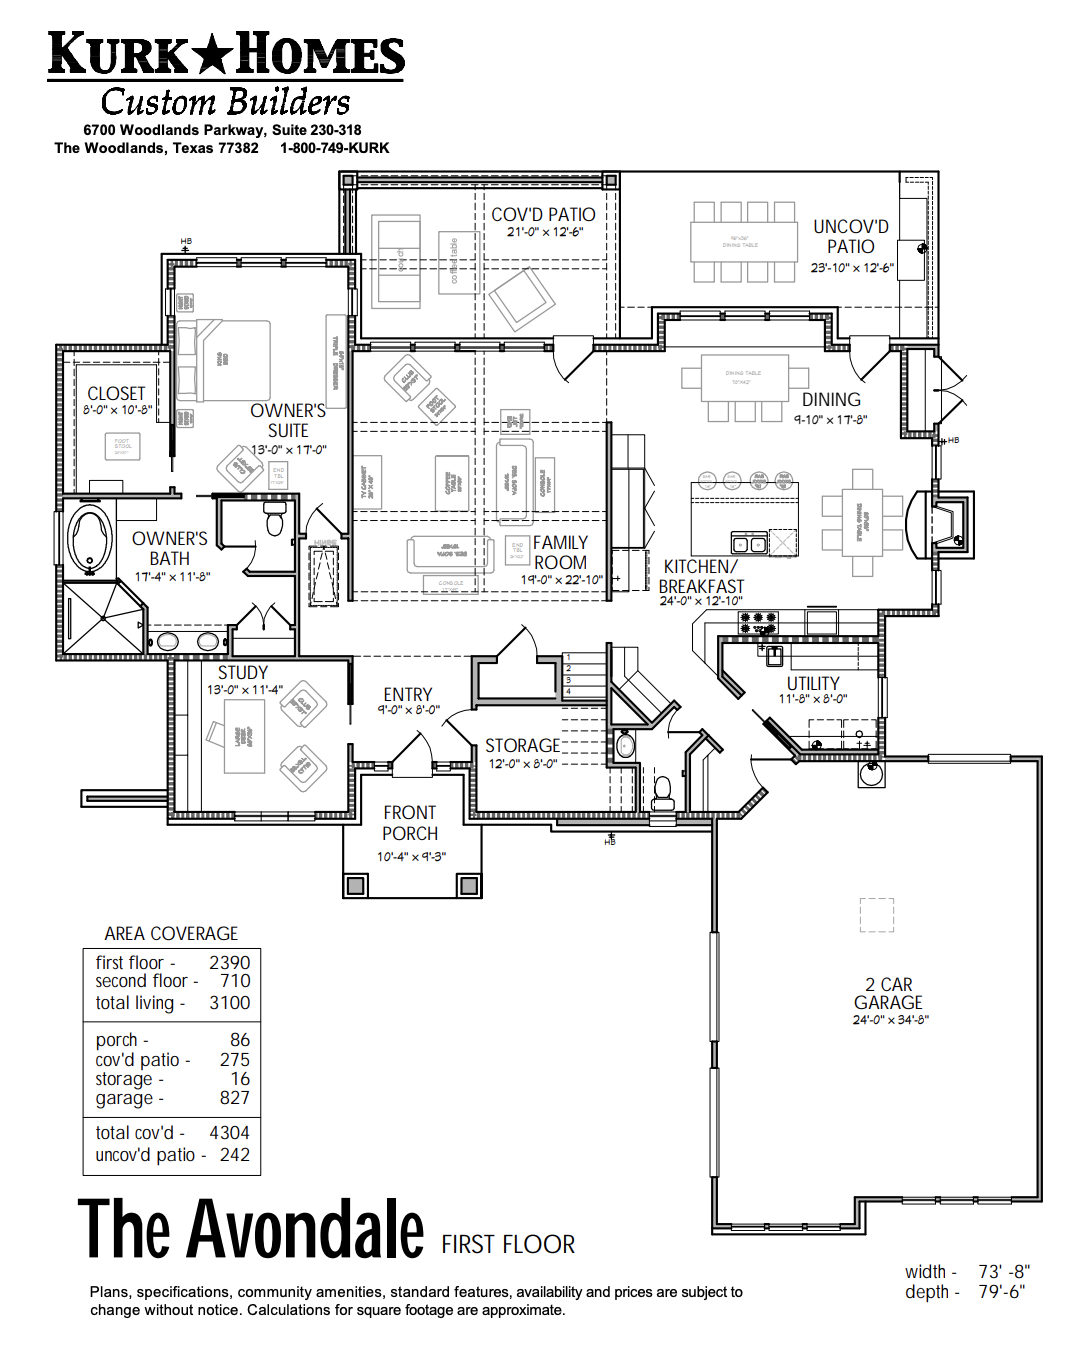 The Avondale Floorplan